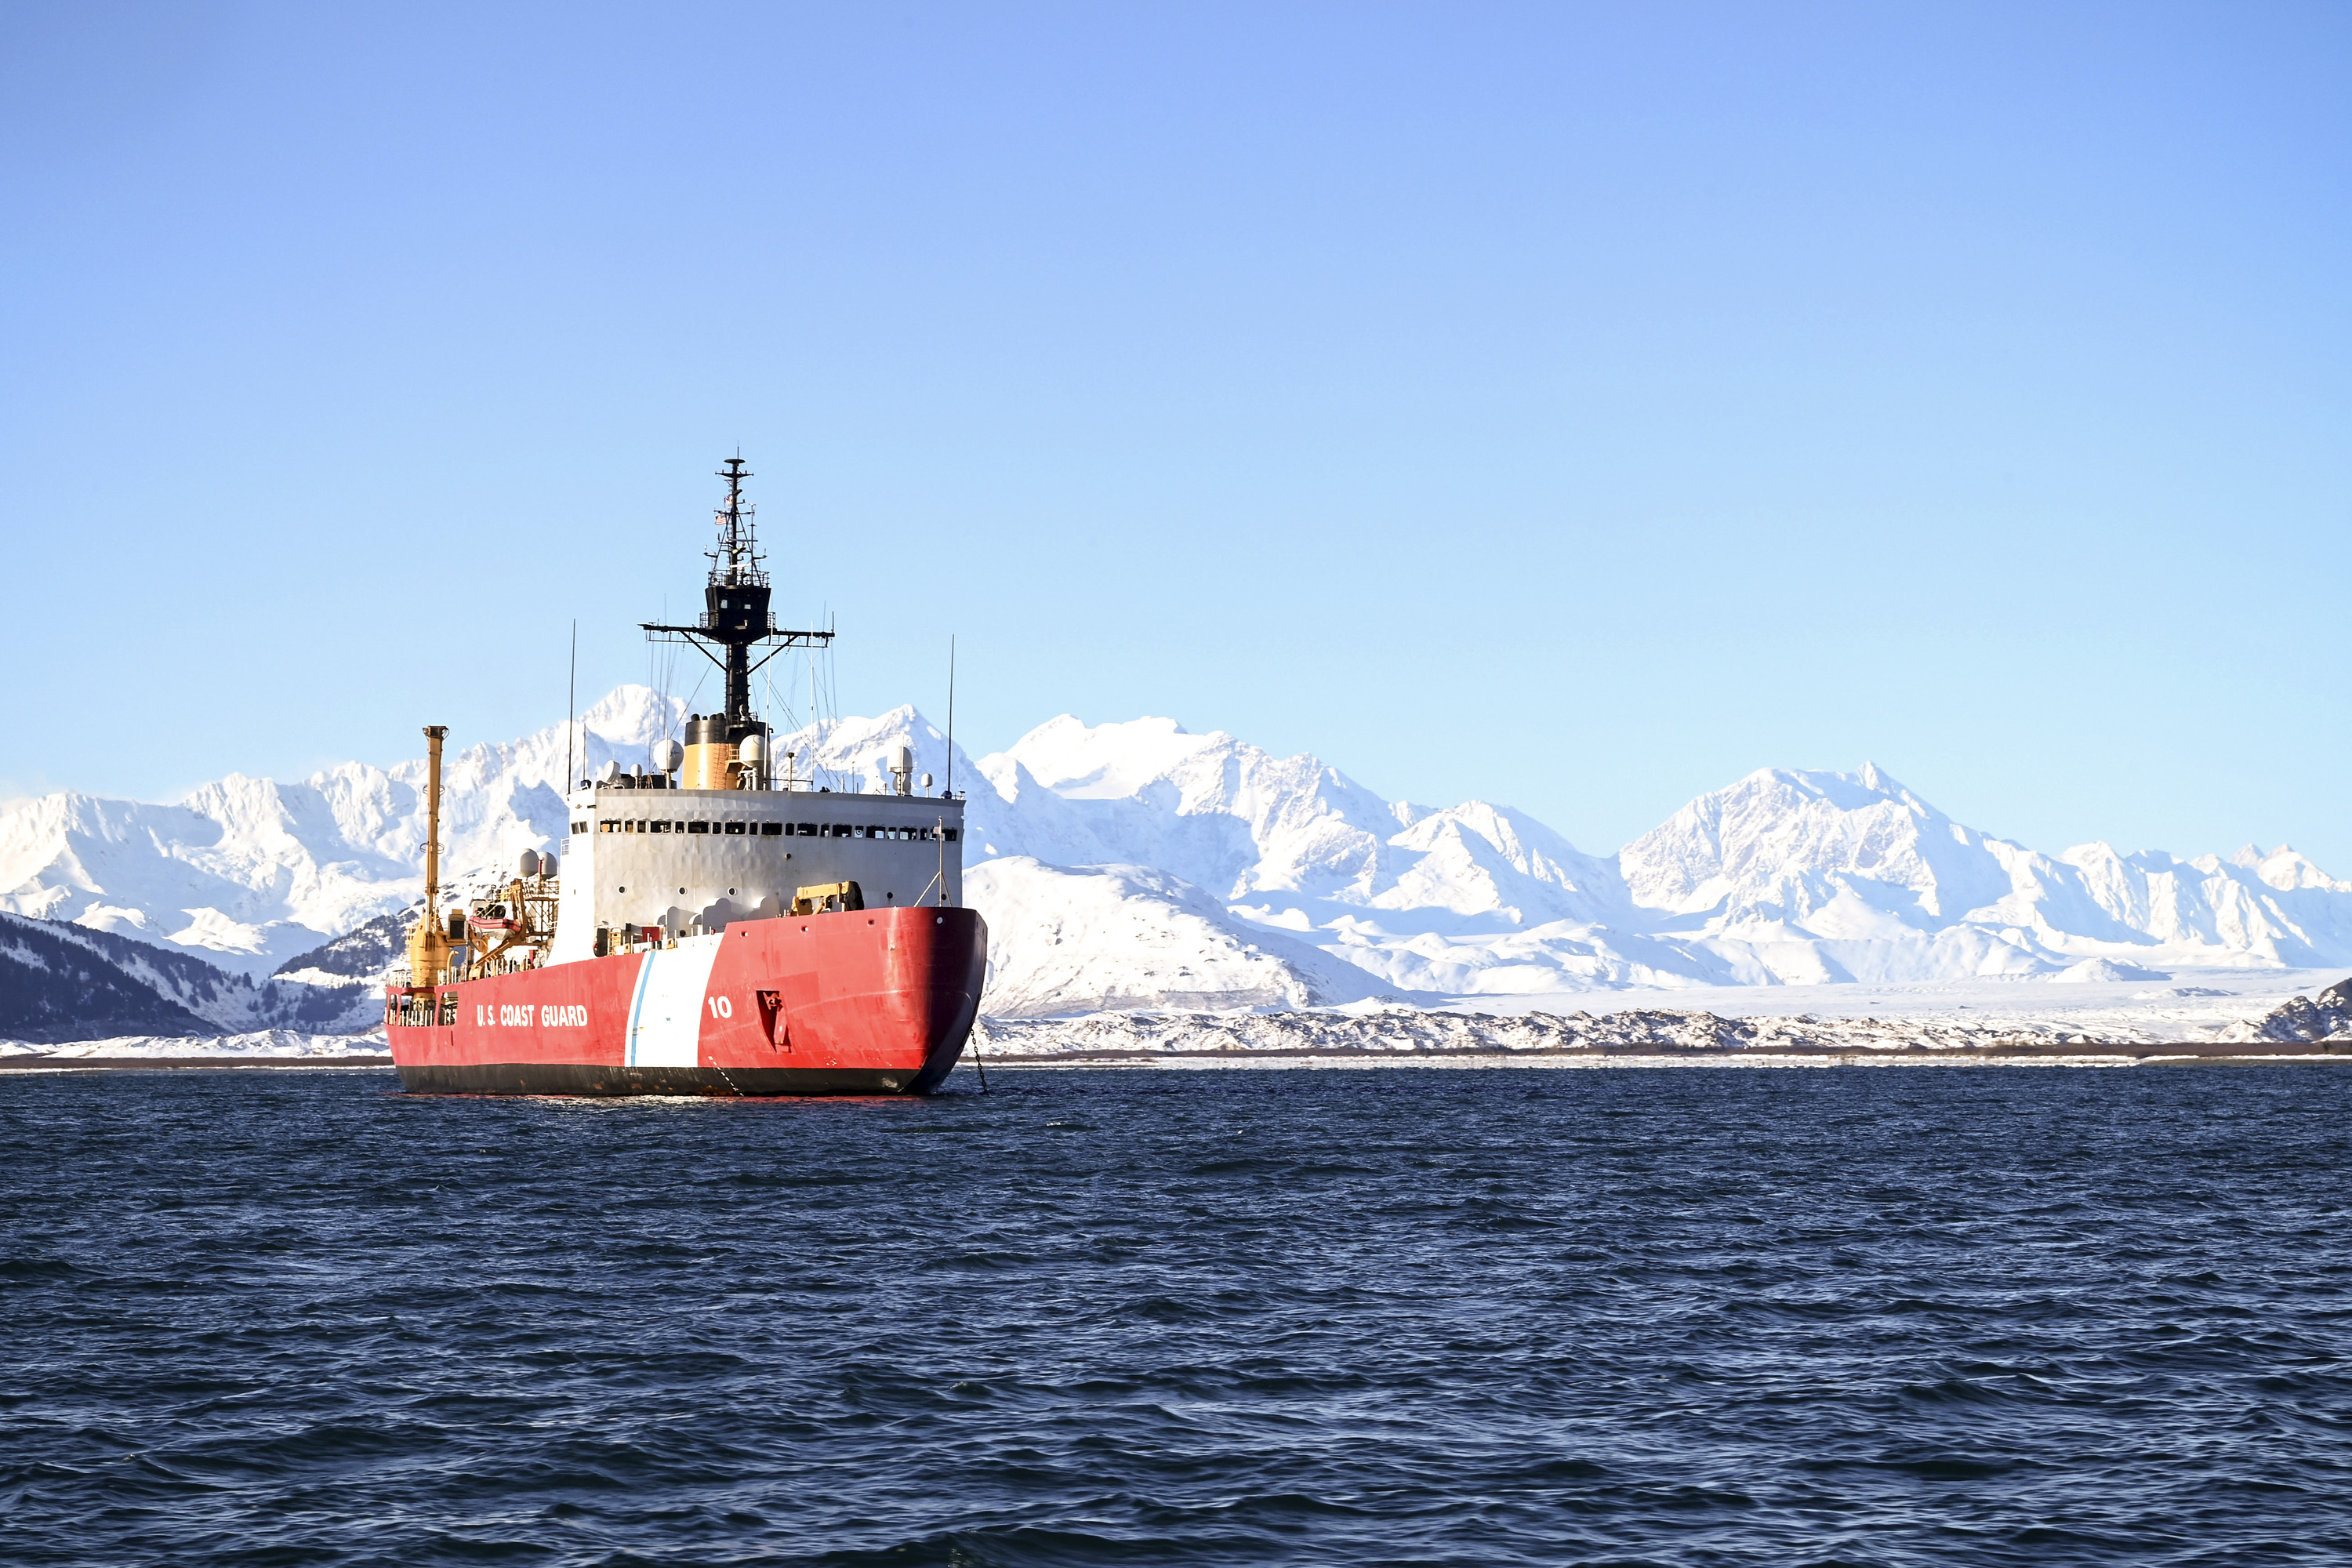 Polar star. USCGC Polar Star. Ледокол Аляска. Arctic Polar Icebreaker. Ледоколы России.